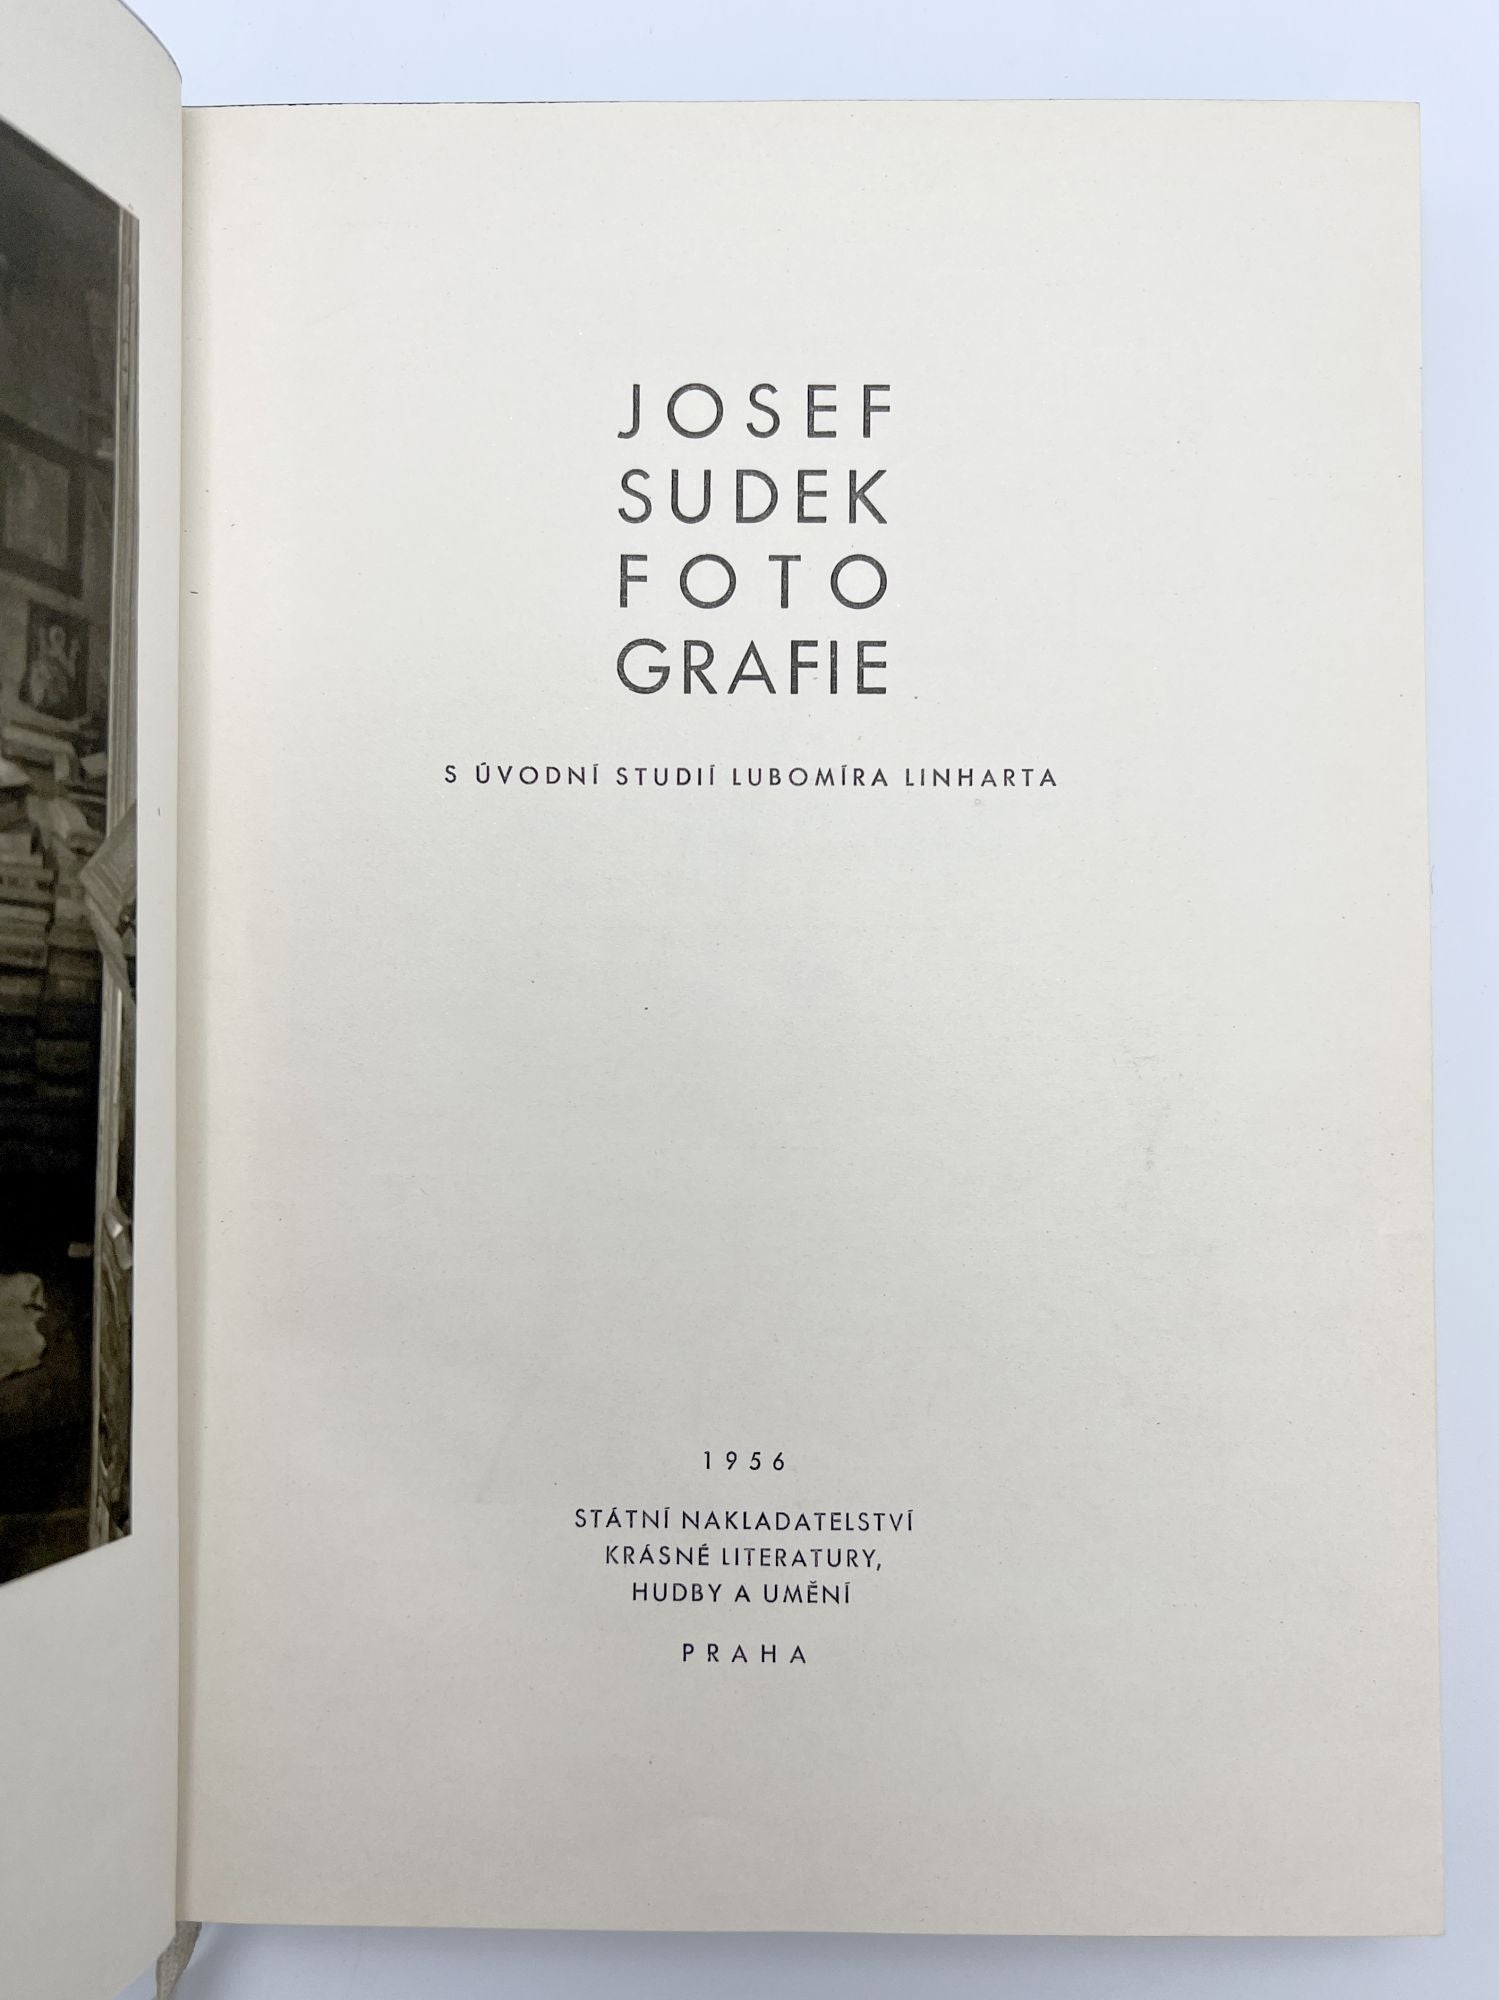 Josef Sudek Fotografie by Josef SUDEK on Riverrun Books & Manuscripts